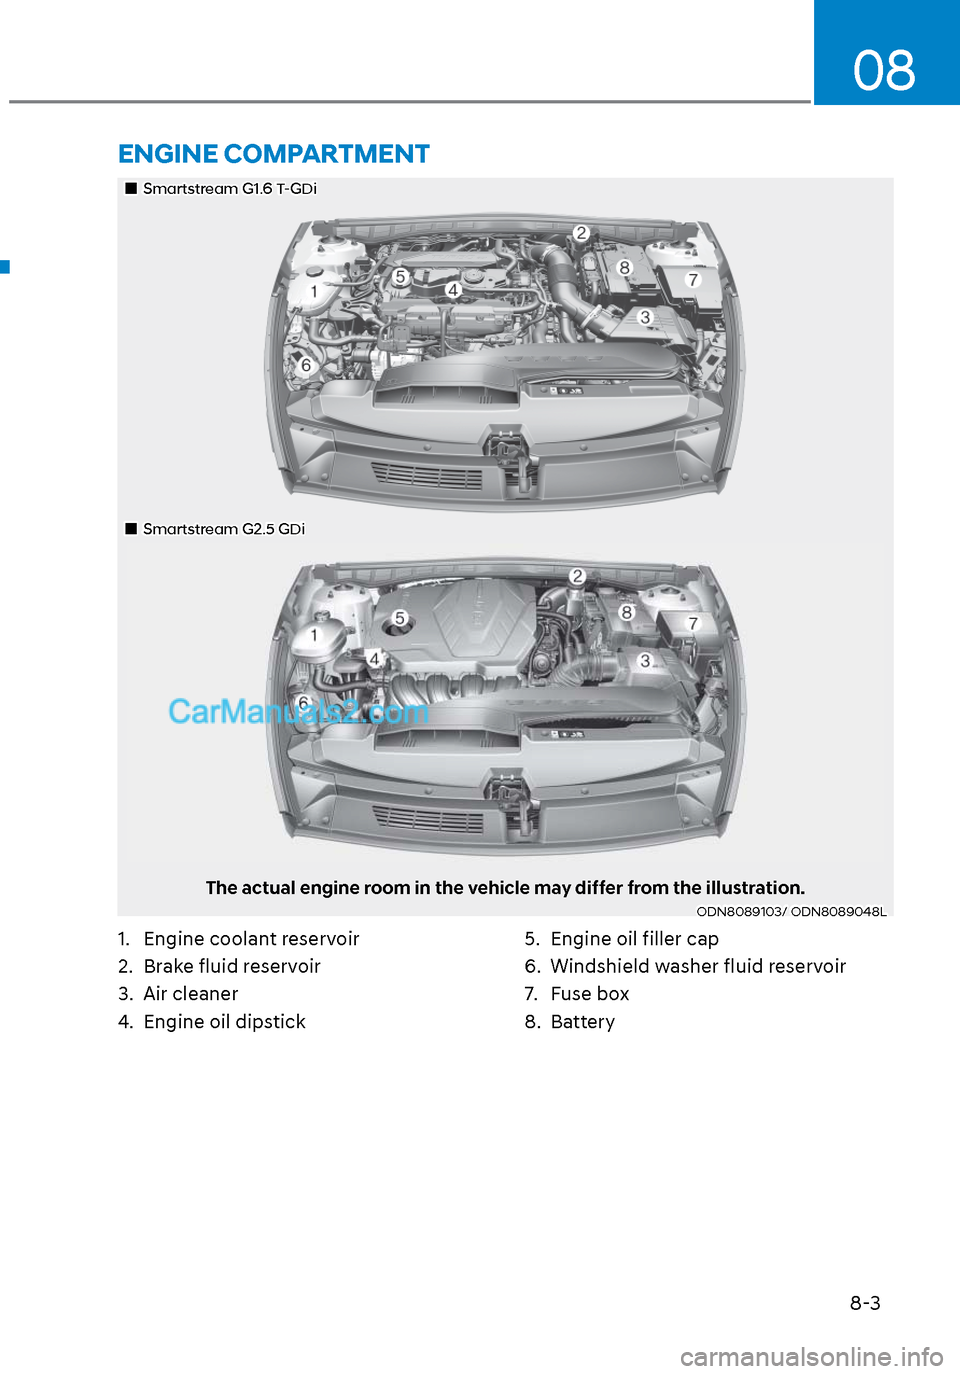 Hyundai Sonata 2020 Service Manual 8-3
08
1.  Engine coolant reservoir
2.  Brake fluid reservoir 
3. Air cleaner
4.  Engine oil dipstick5.  Engine oil filler cap
6.  Windshield washer fluid reservoir
7. Fuse box
8. Battery
ENGINE COMPA